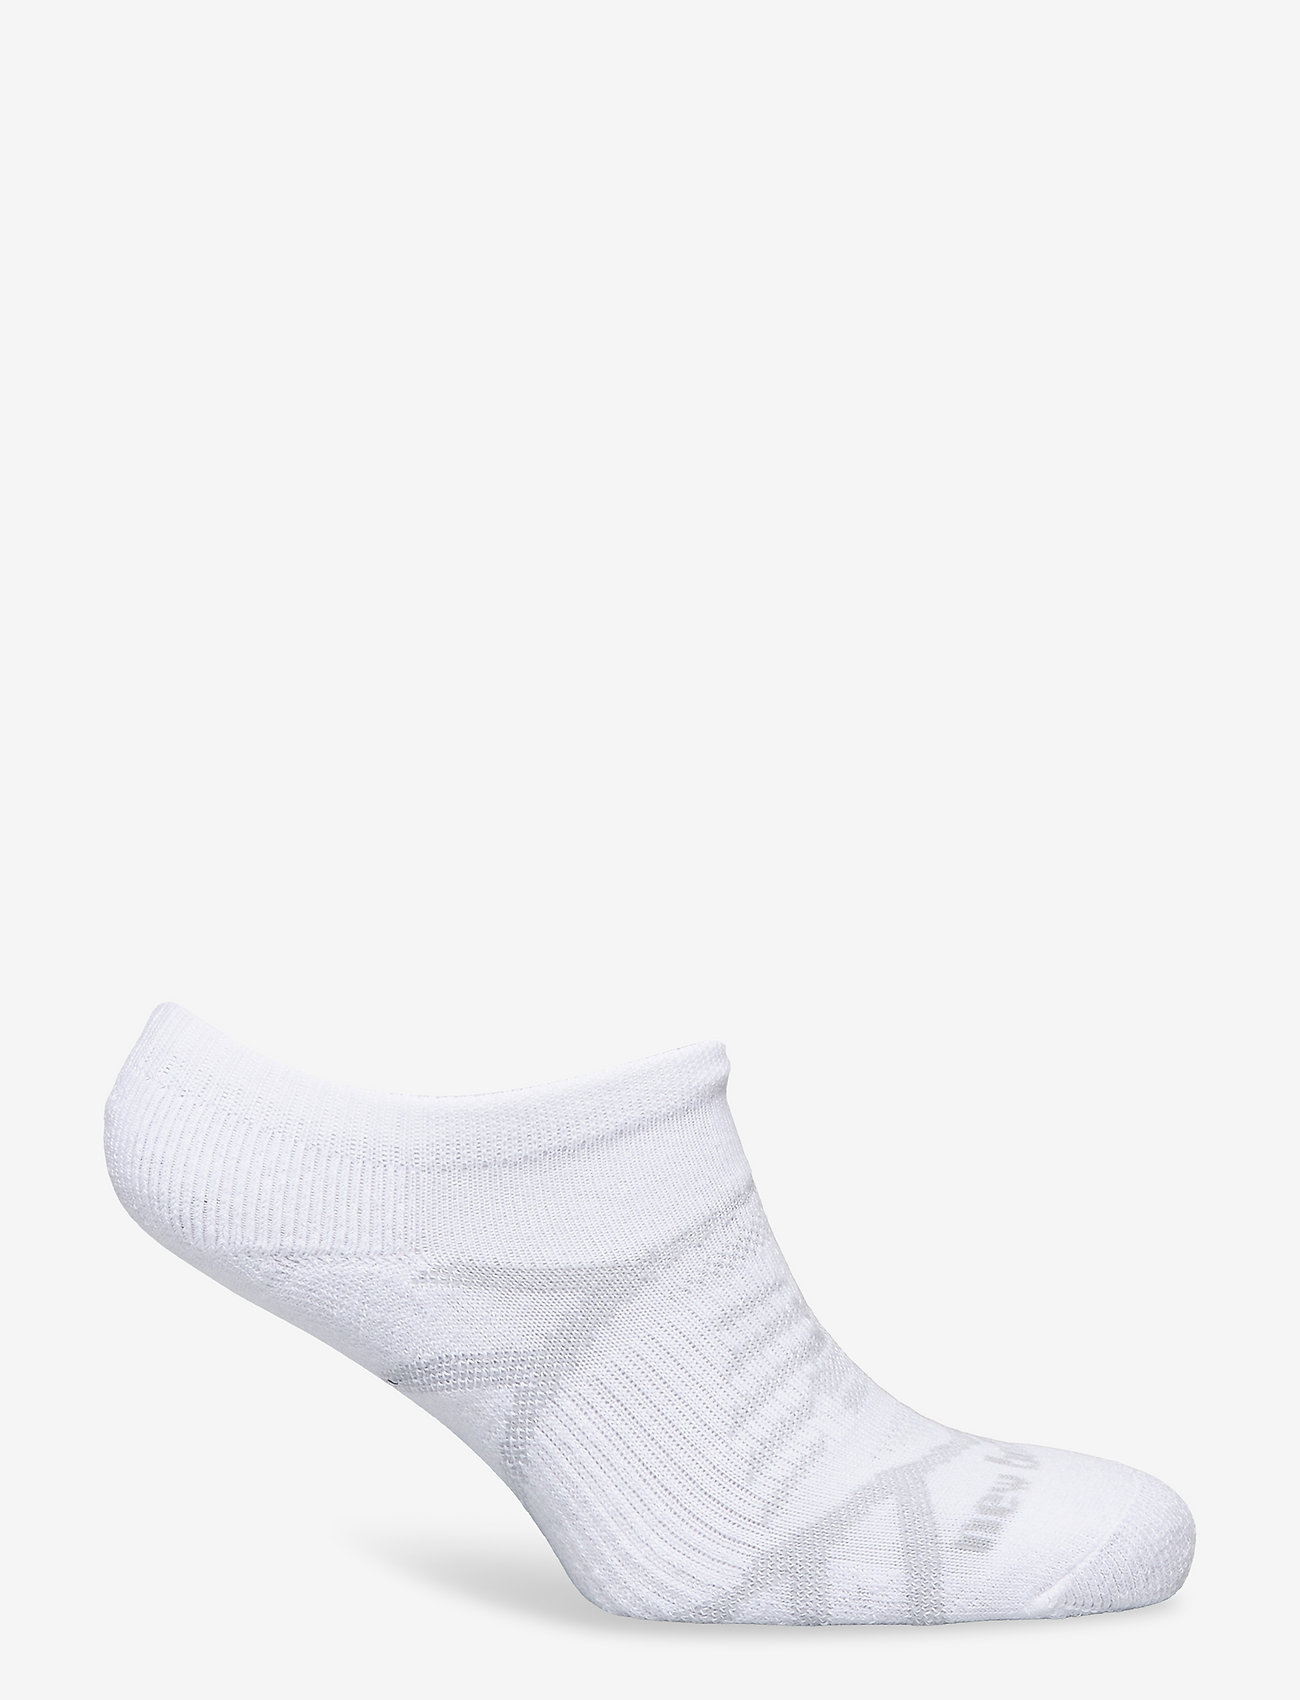 New Balance No Show Socks - Ankle socks | Boozt.com